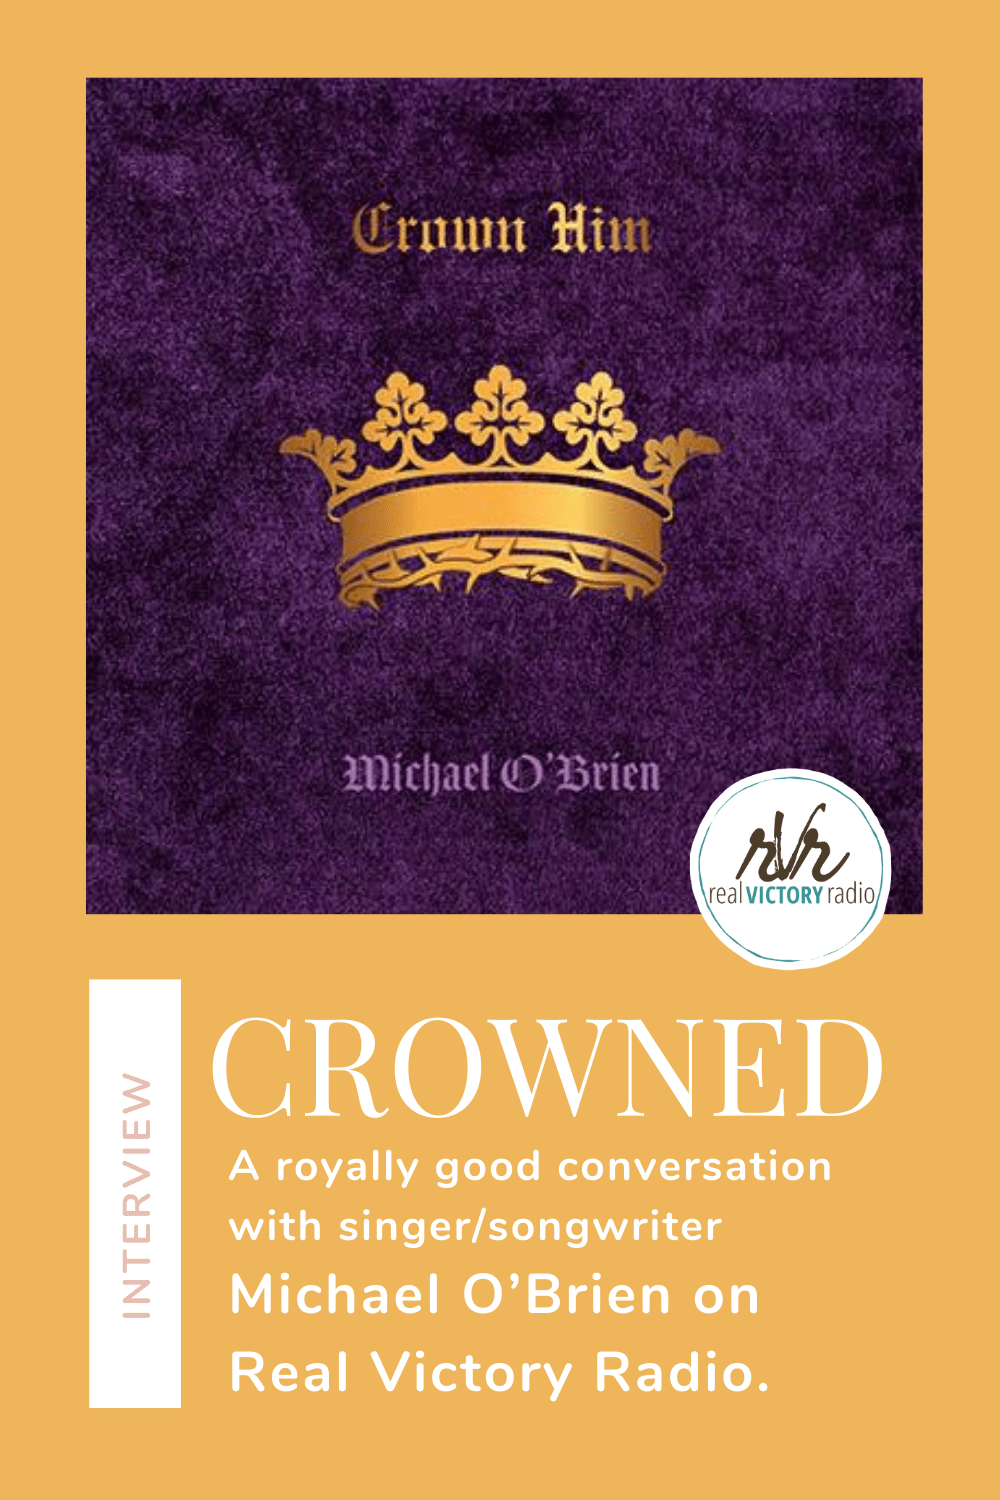 Crowned Crown Him Michael O'Brien